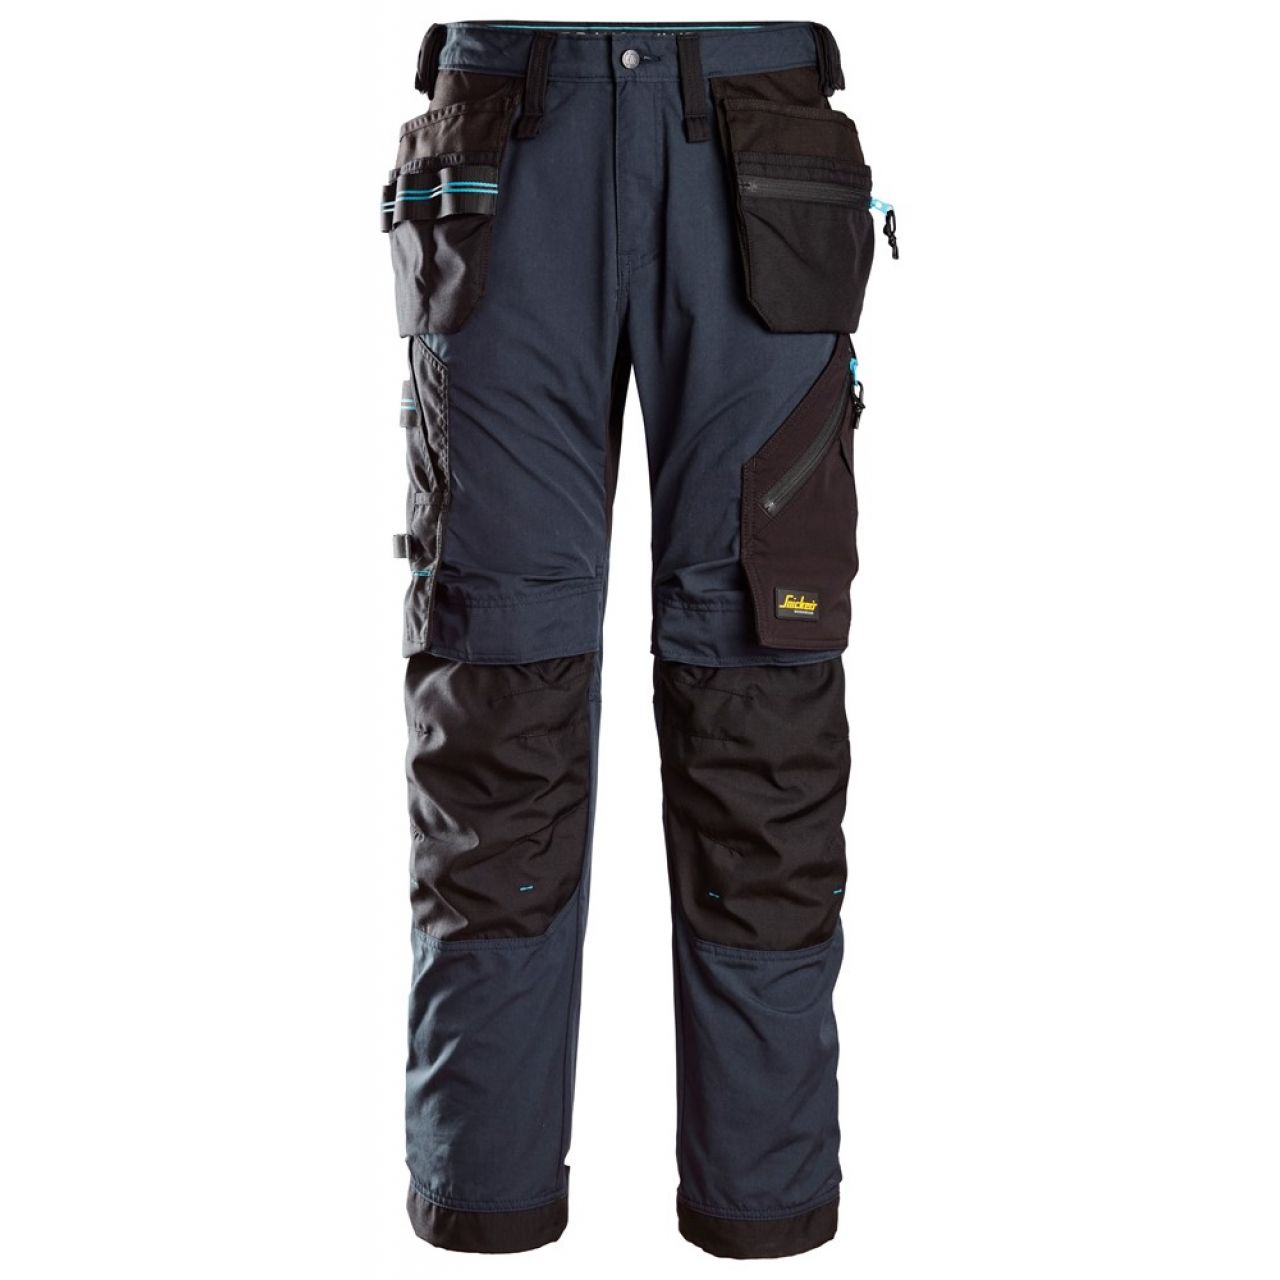 6210 Pantalones largos de trabajo con bolsillos flotantes LiteWork 37.5® azul marino-negro talla 216